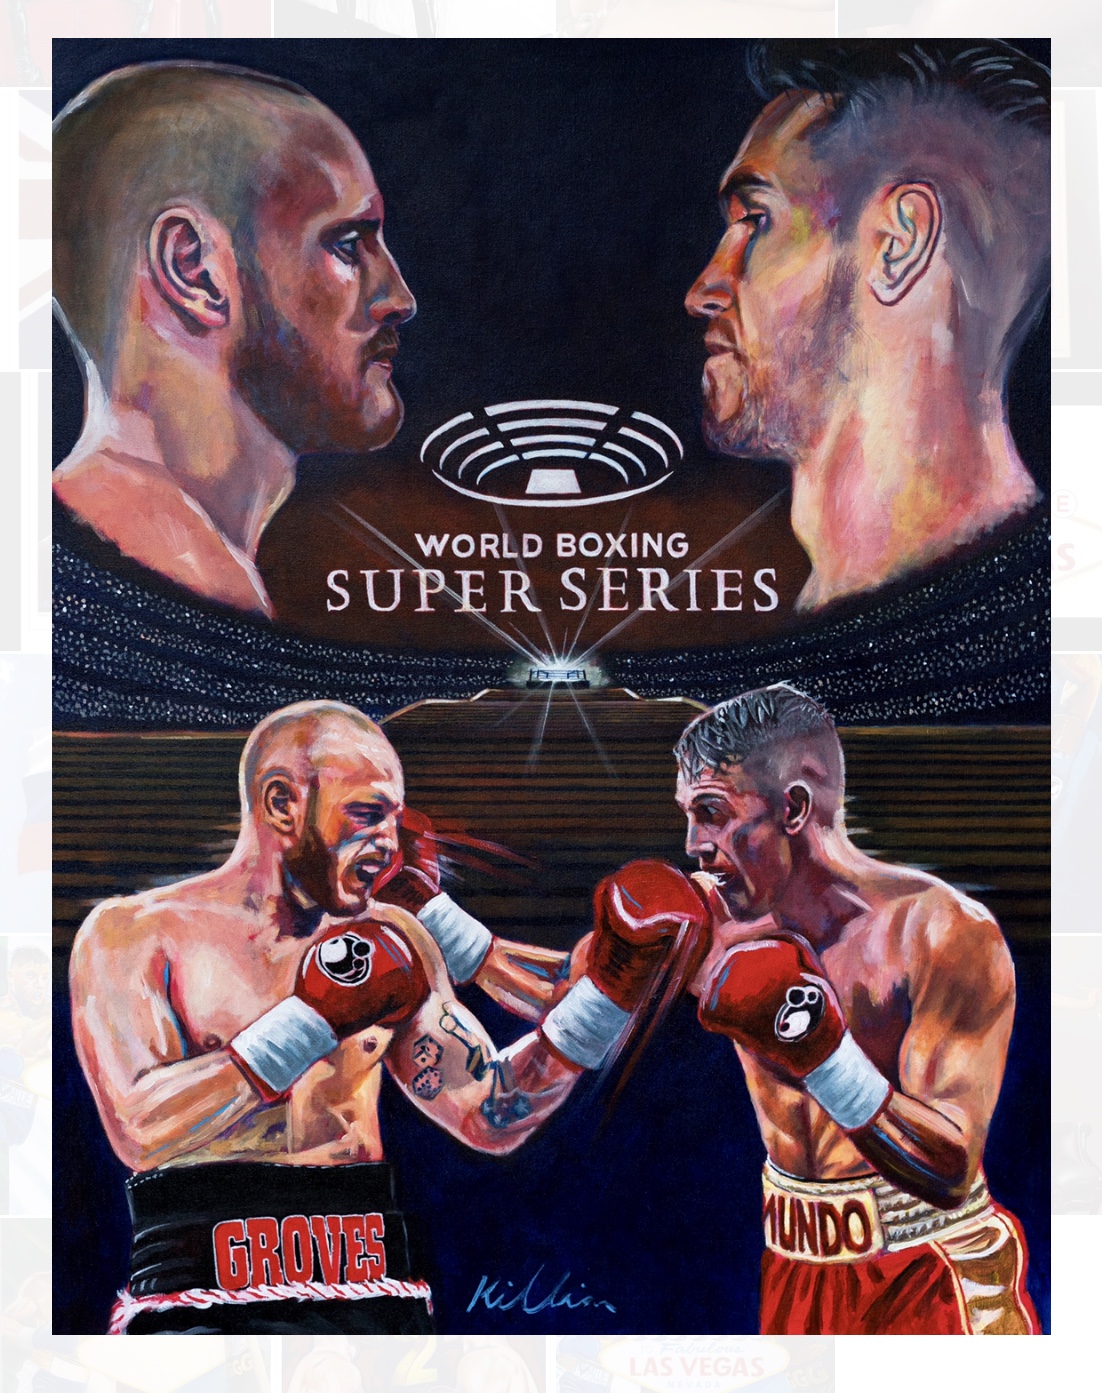 Boxing Frampton vs Quigg Art Print By Killian Art Signed By Carl Frampton 